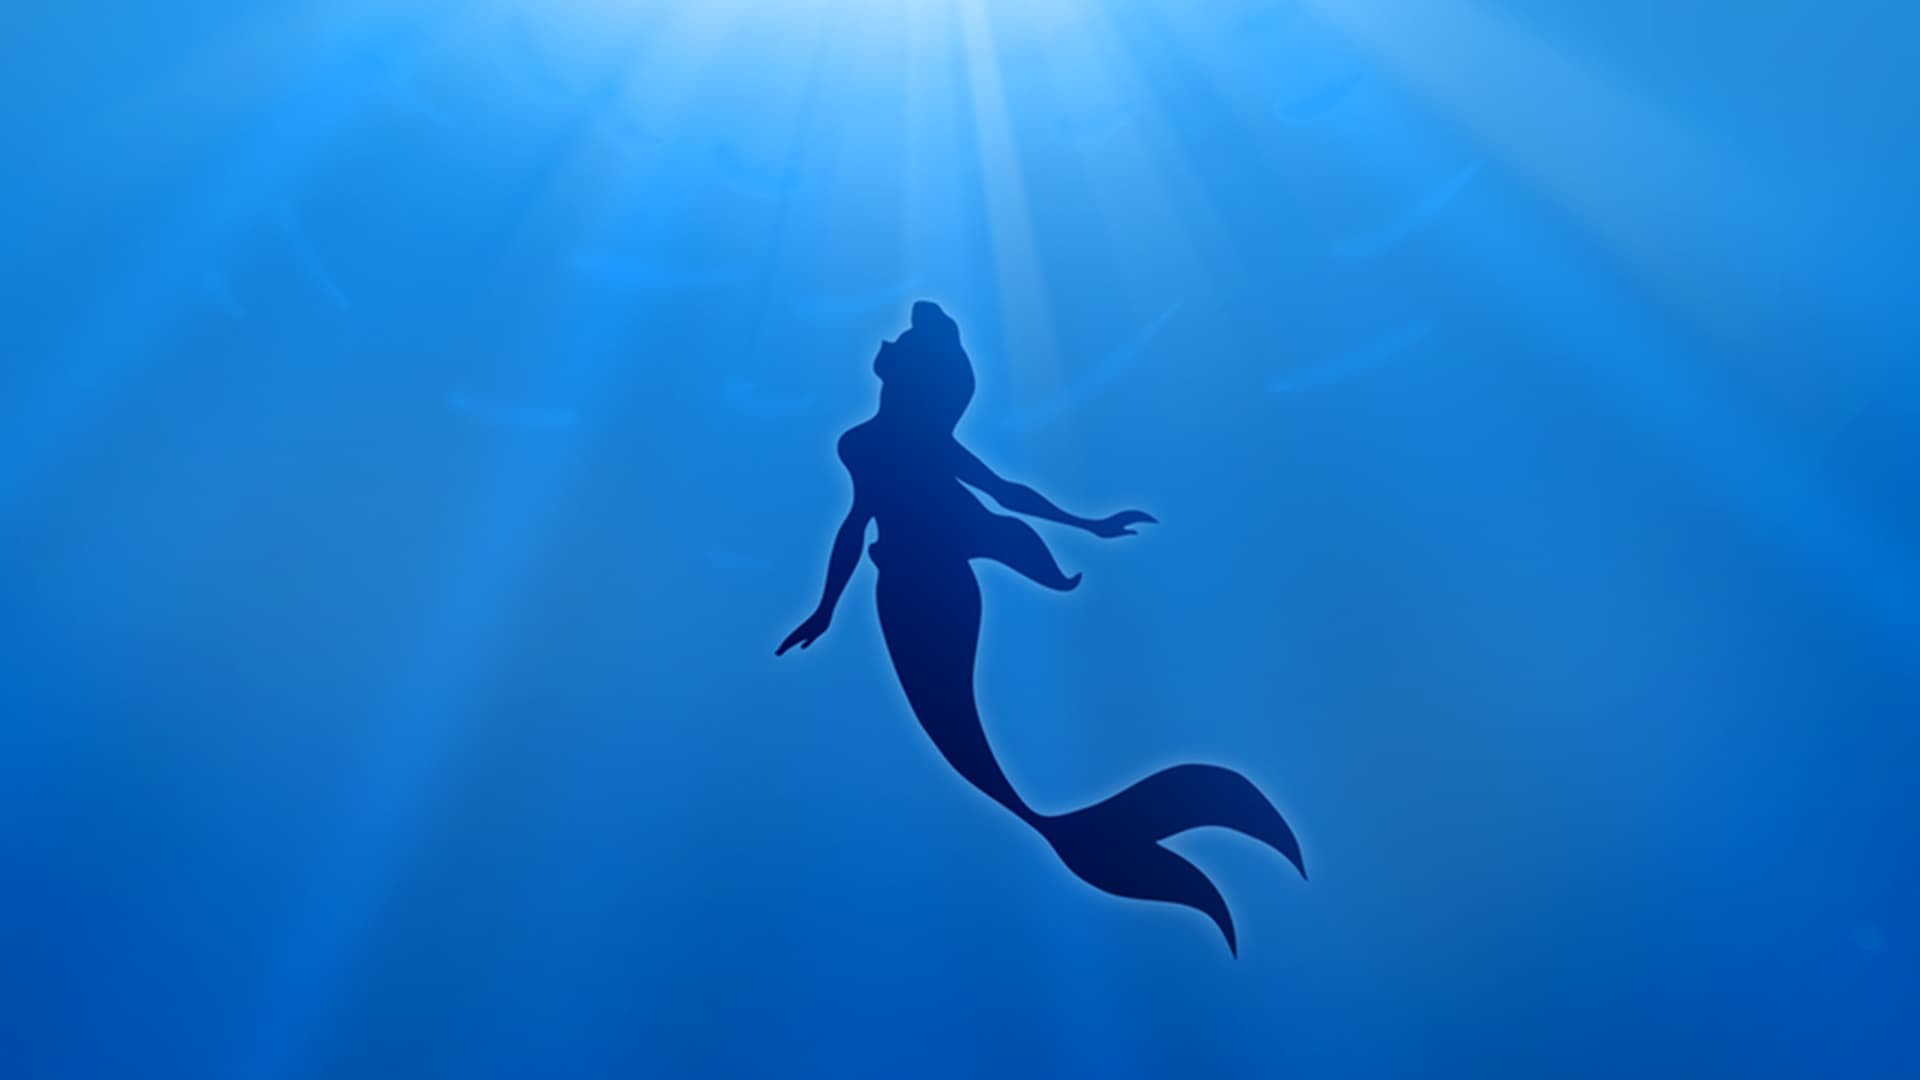 Mermaids wallpaper for desktop